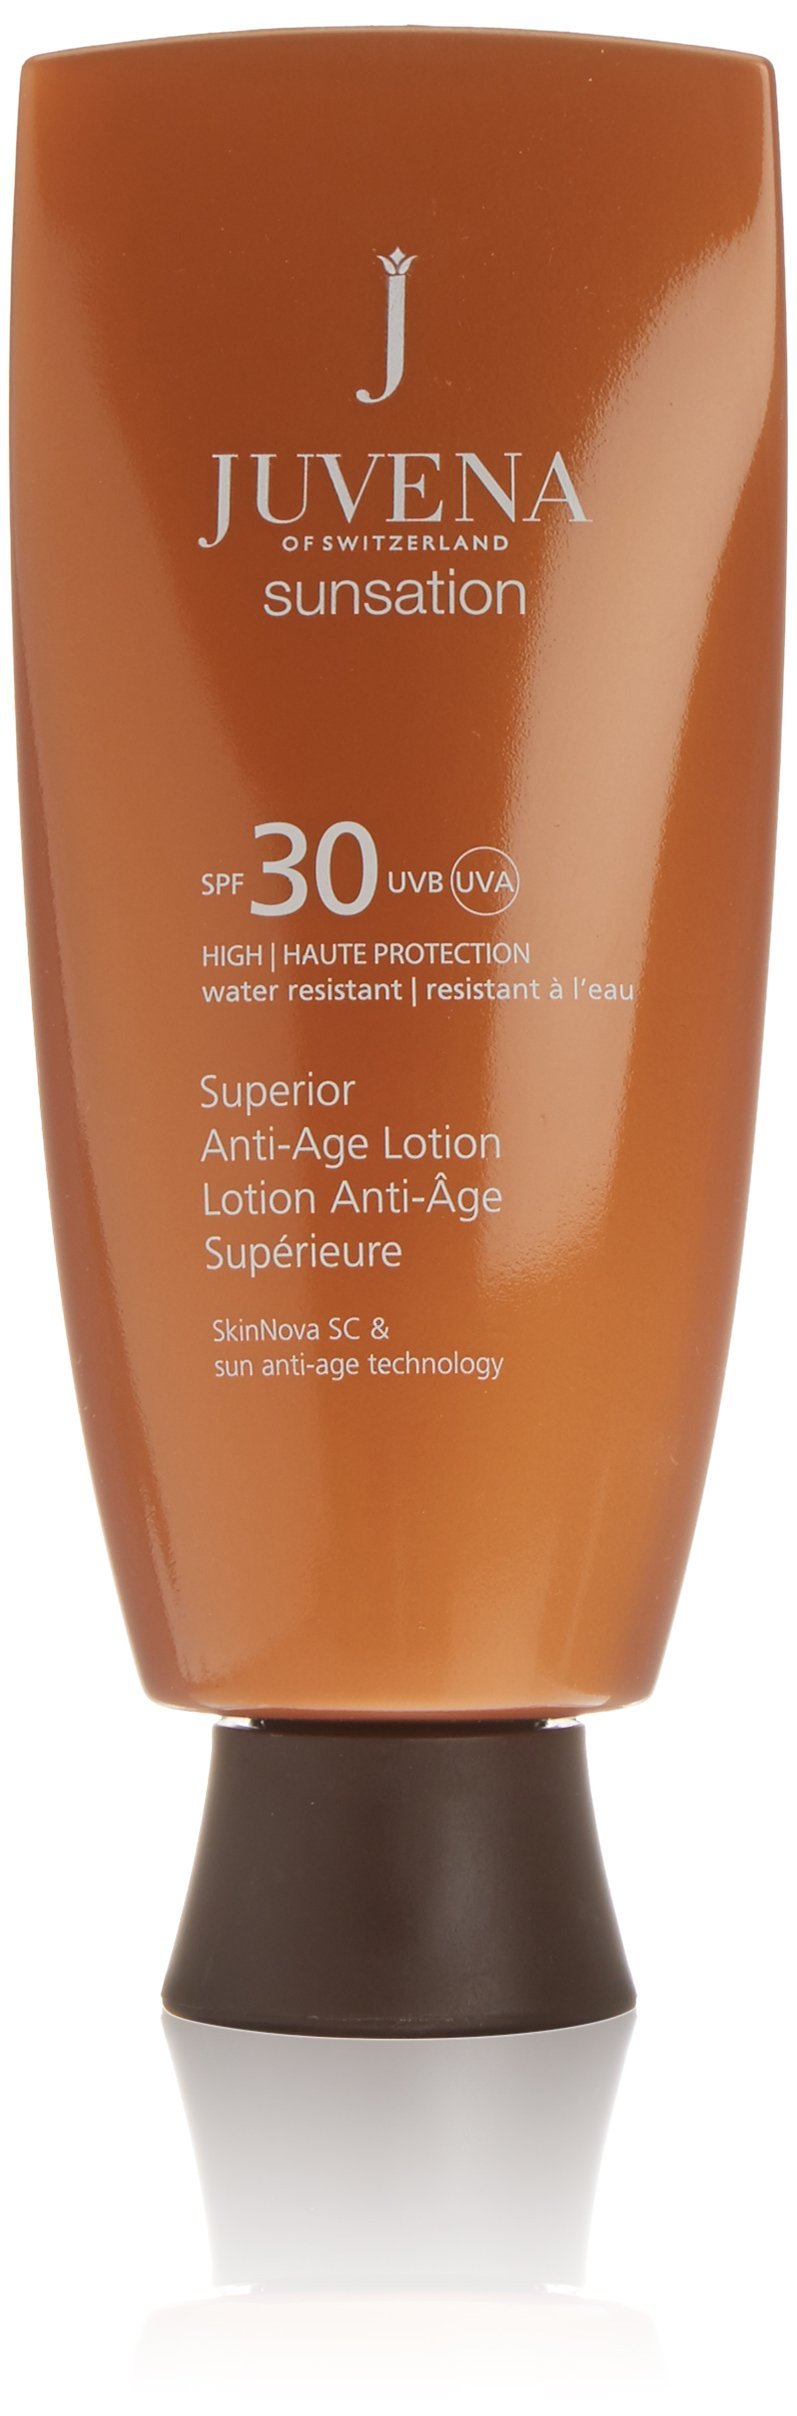 Juvena Sunsation Superior Anti-Age Lotion, 50 ml